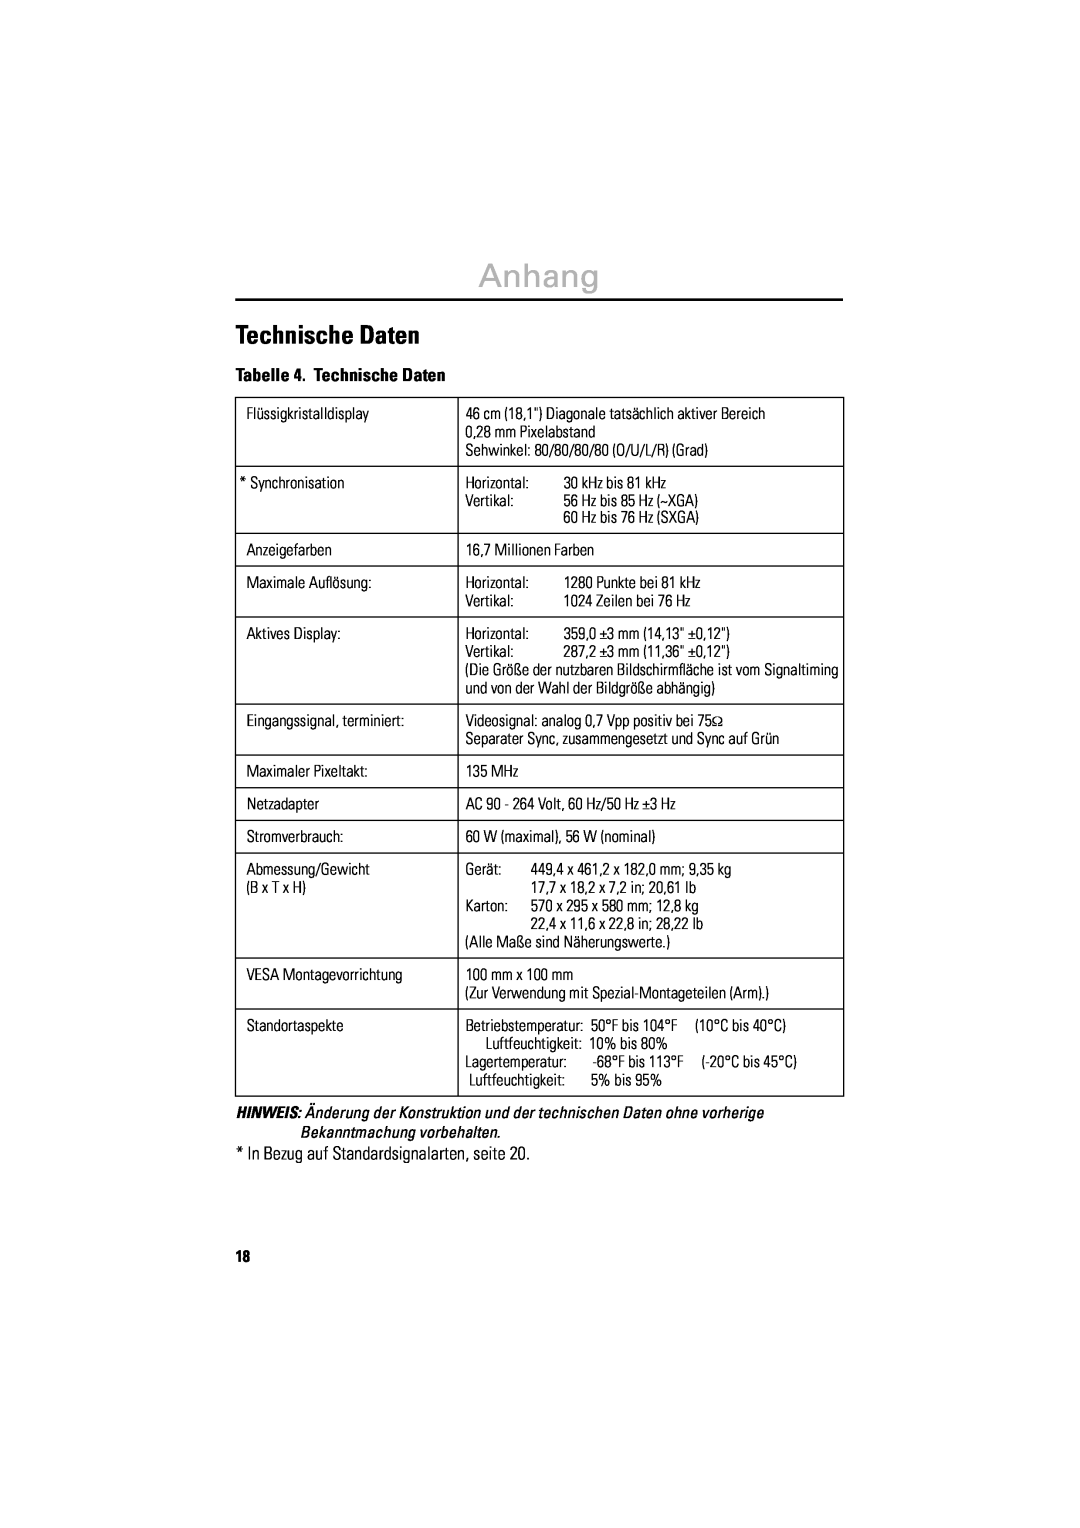 Samsung 800TFT, LSA800SN/XEG manual Anhang, In Bezug auf Standardsignalarten, seite, Tabelle 4. Technische Daten 